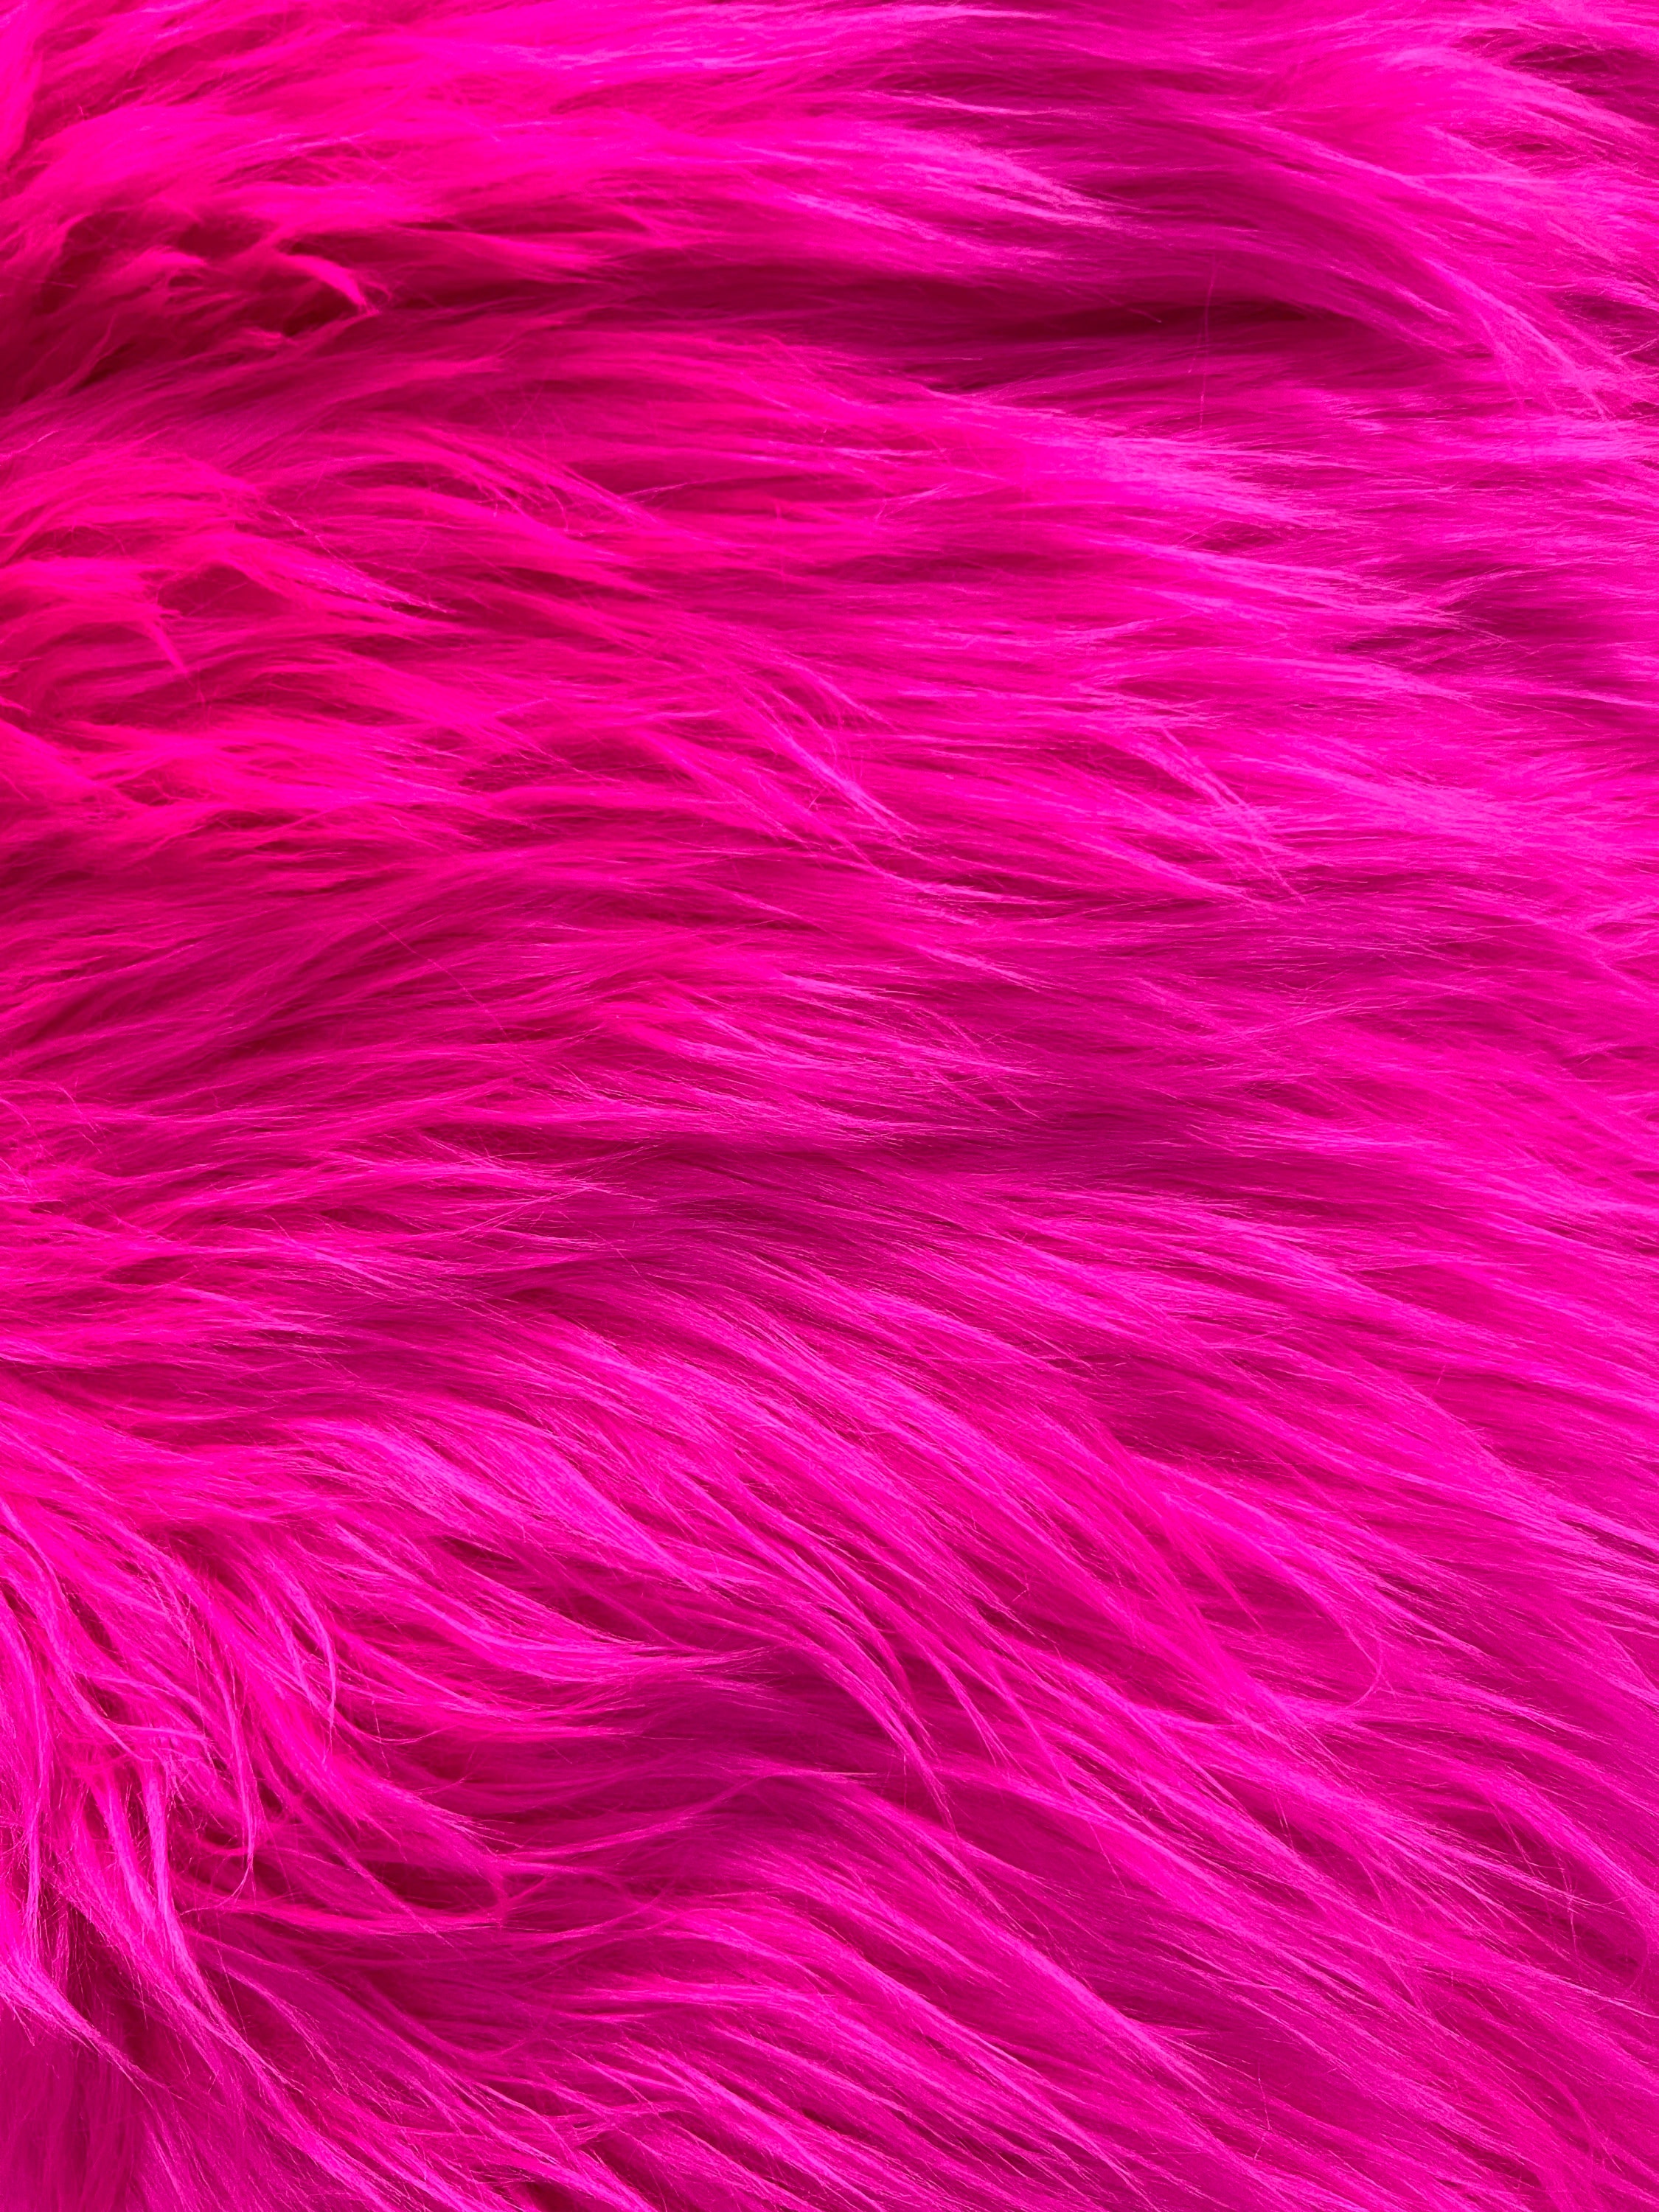 Eden LIGHT PINK Shaggy Long Pile Soft Faux Fur Fabric for Fursuit, Cosplay  Costume, Photo Prop, Trim, Throw Pillow, Crafts 